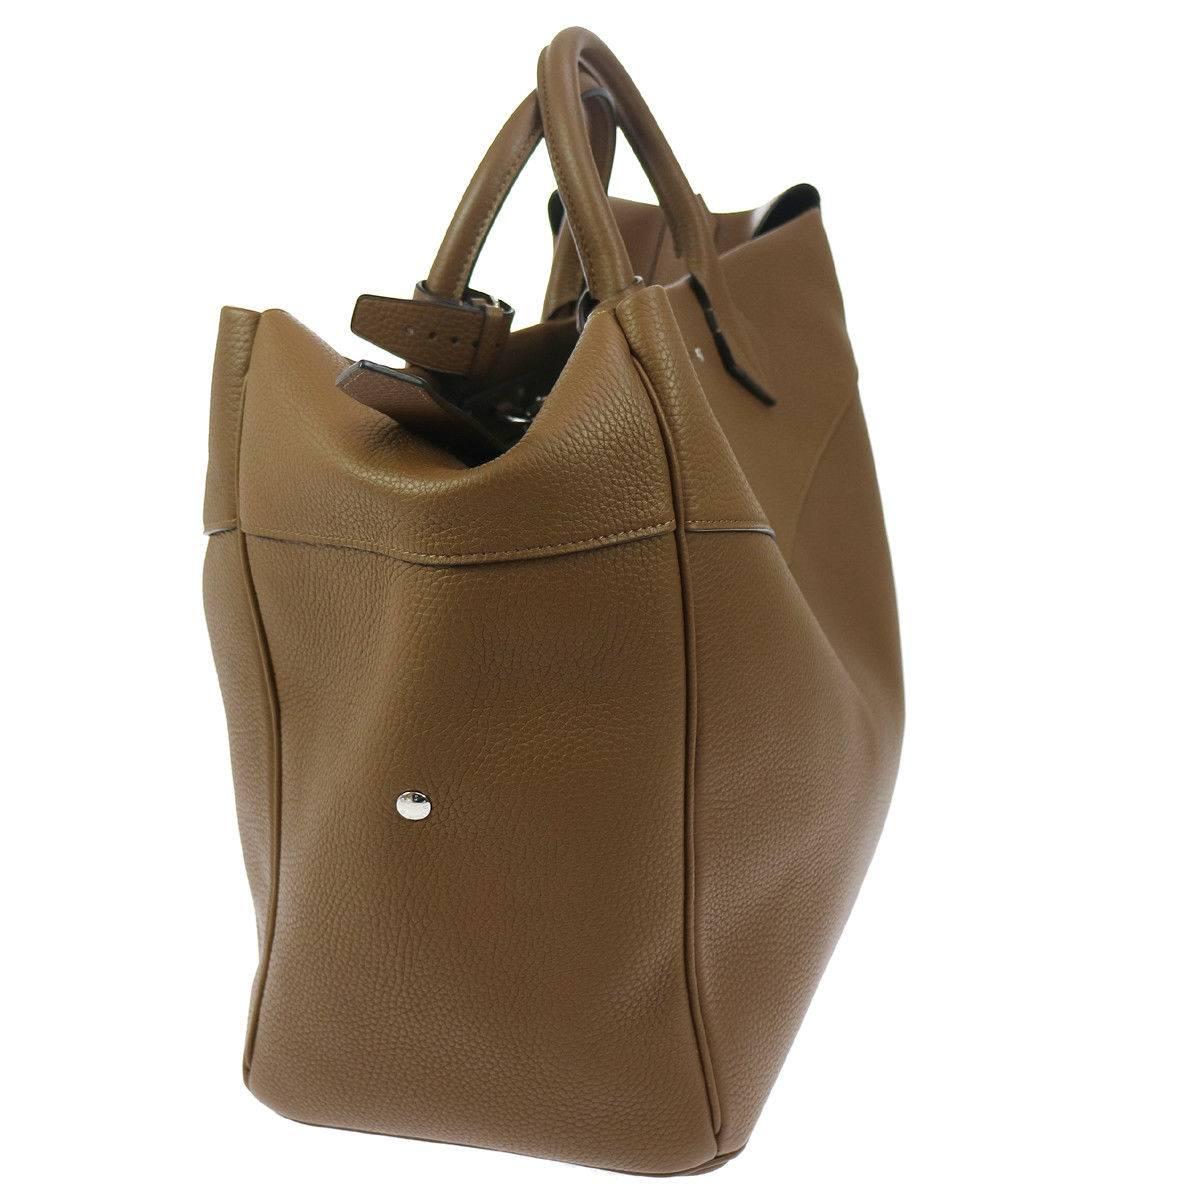 Brown Louis Vuitton New Tan Leather Men's Women's Travel Weekender Carryall Bag